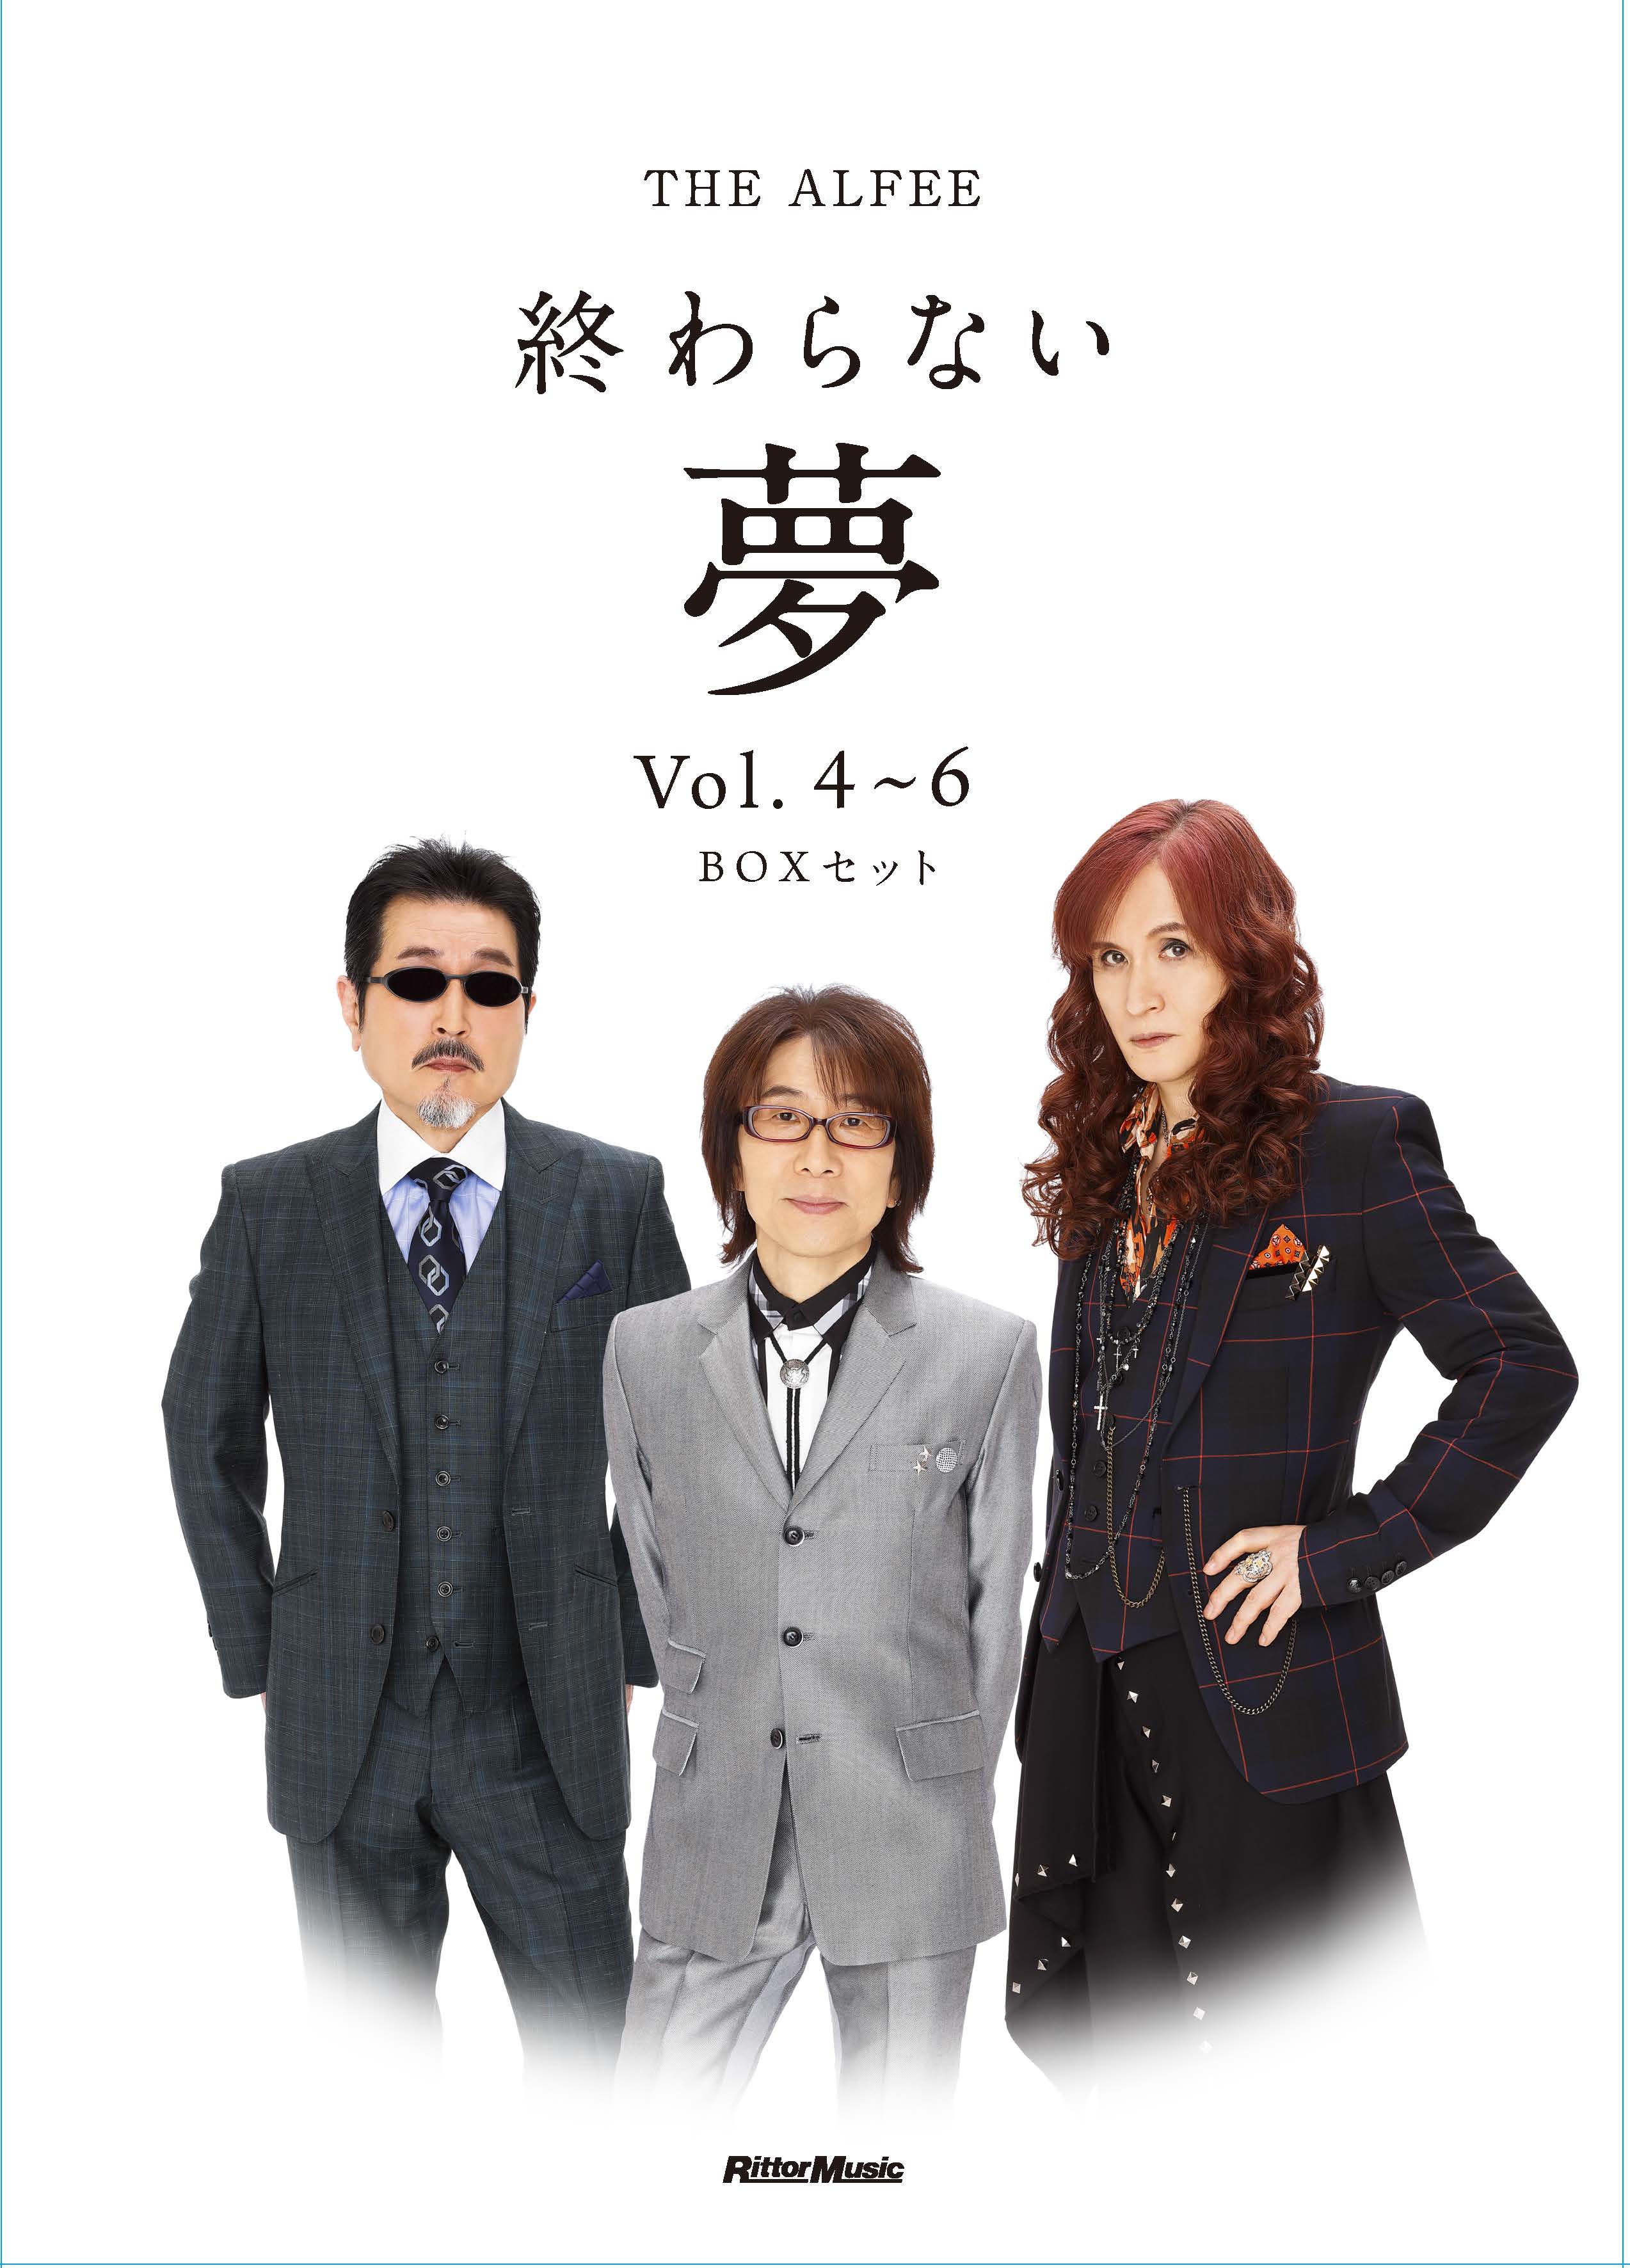 NHK FMの大人気番組『THE ALFEE 終わらない夢』書籍版、待望の続編が